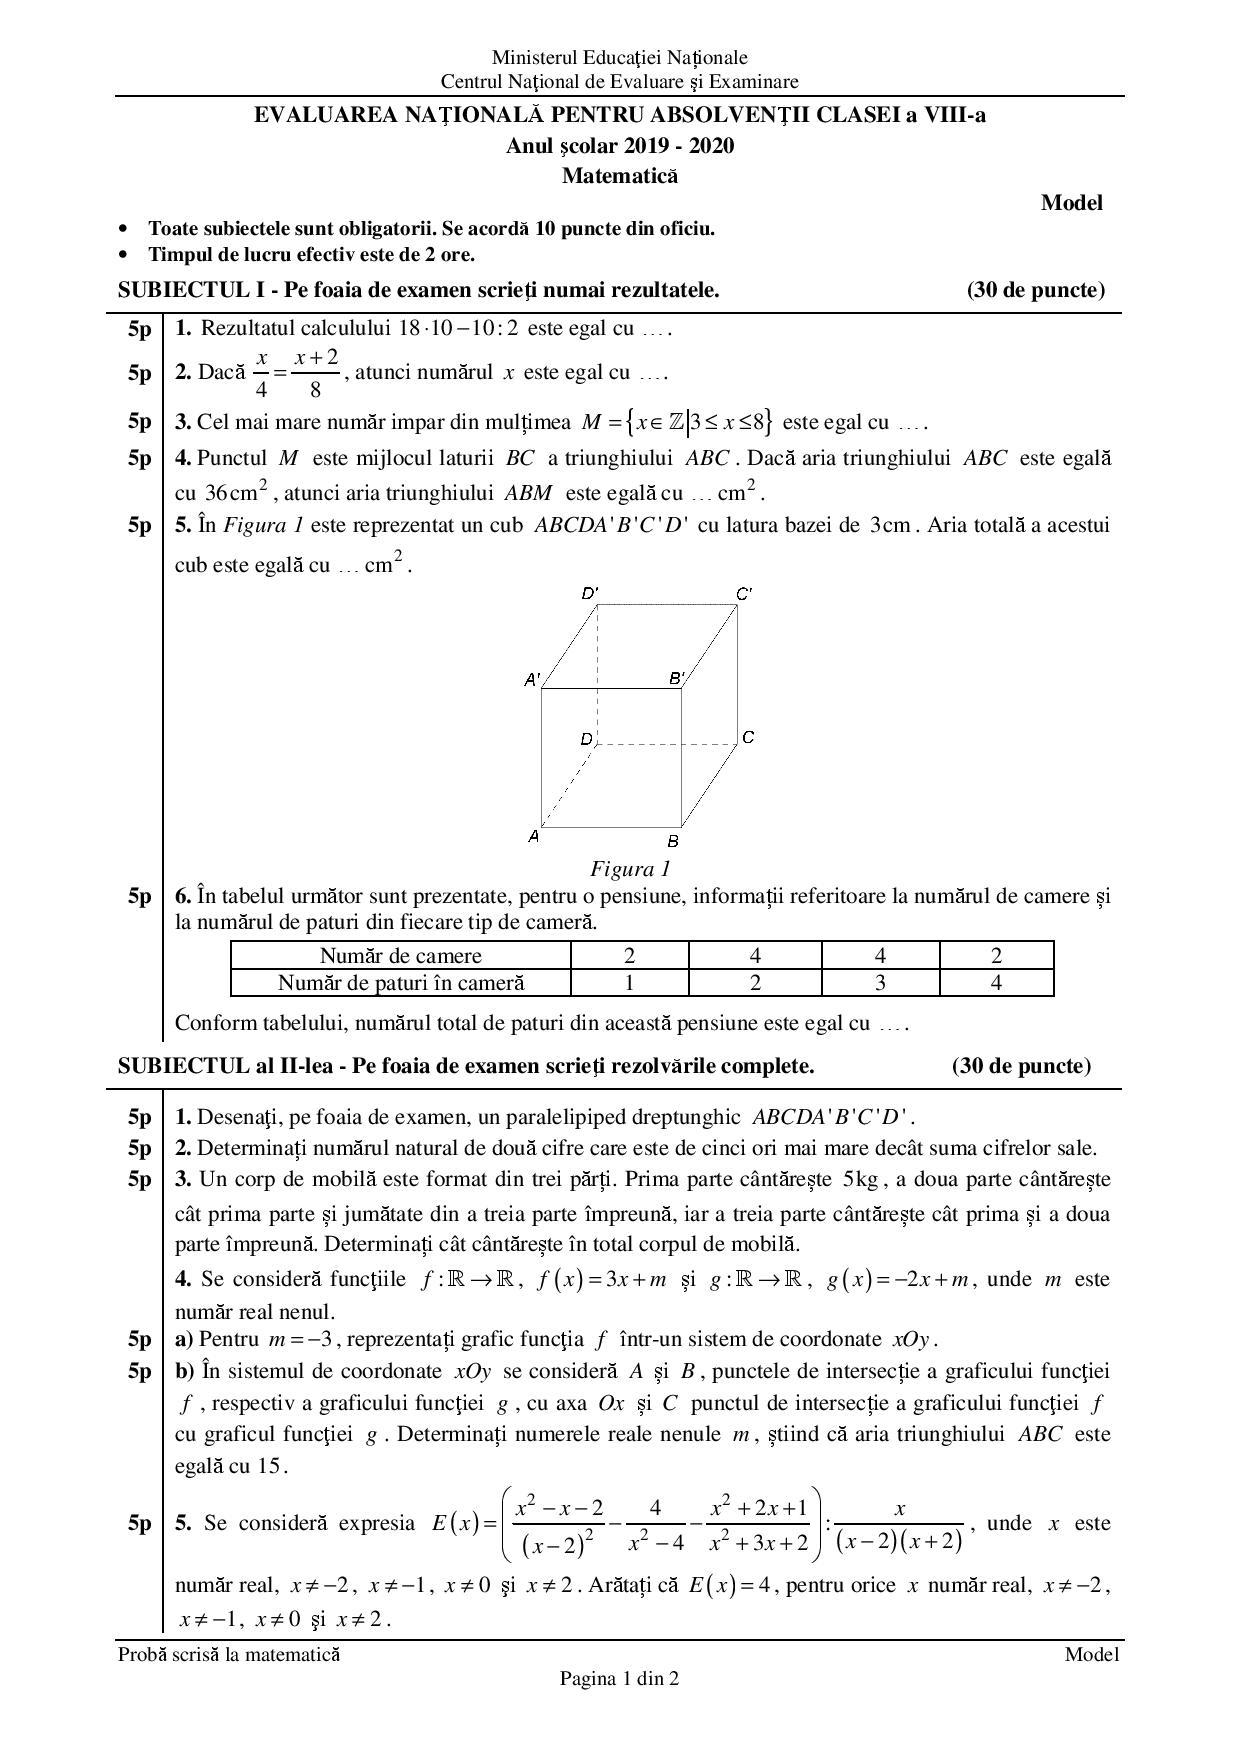 EN_matematica_2020_var_model_LRO-page-001.jpg